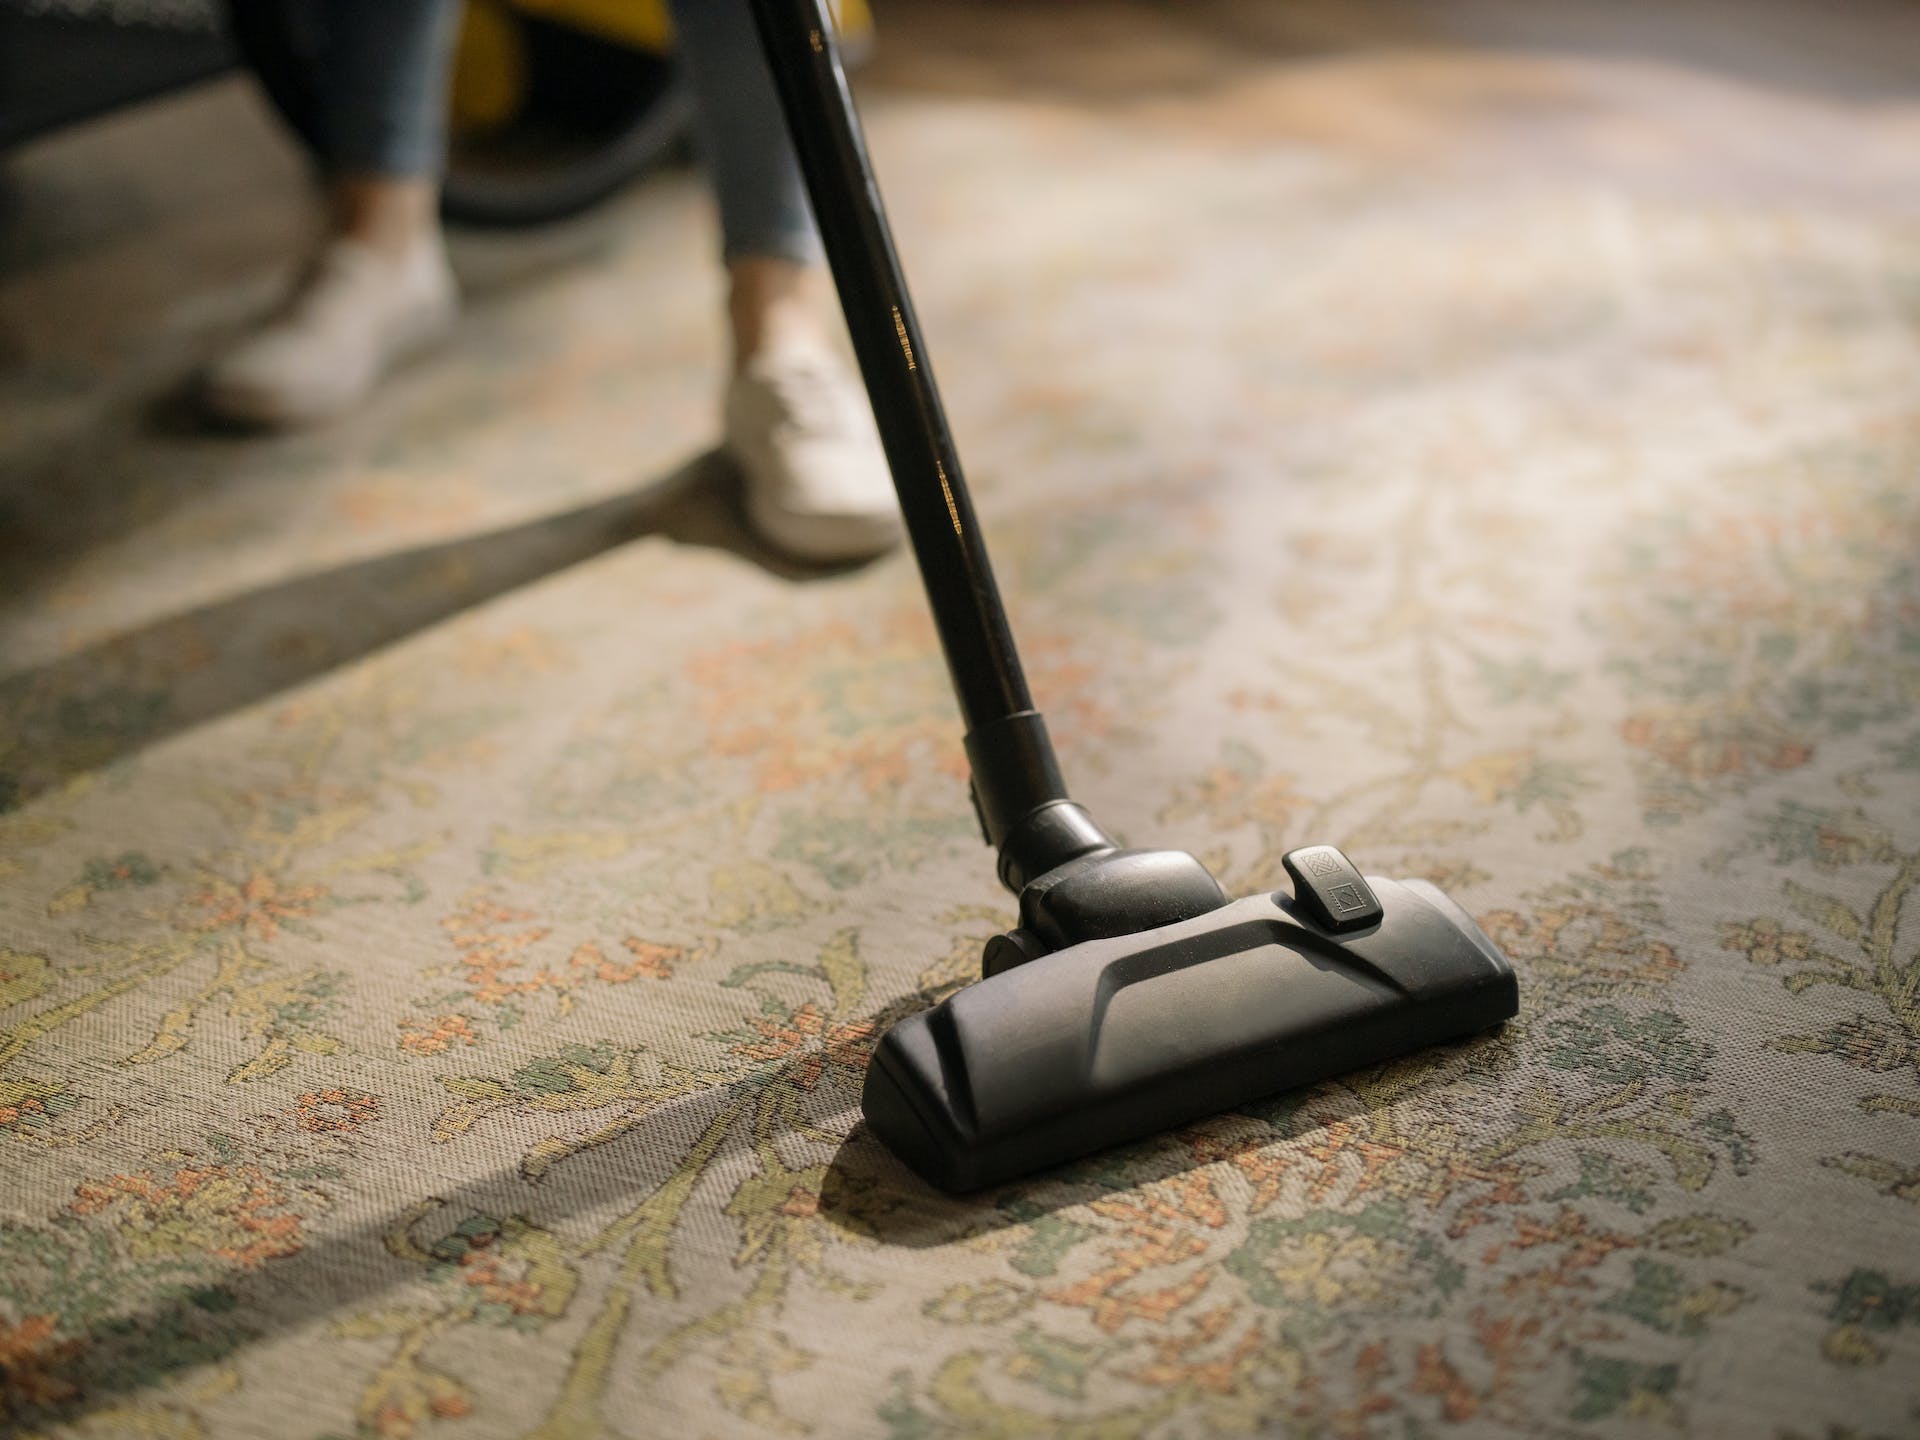 A person vacuuming a rug | Source: Pexels